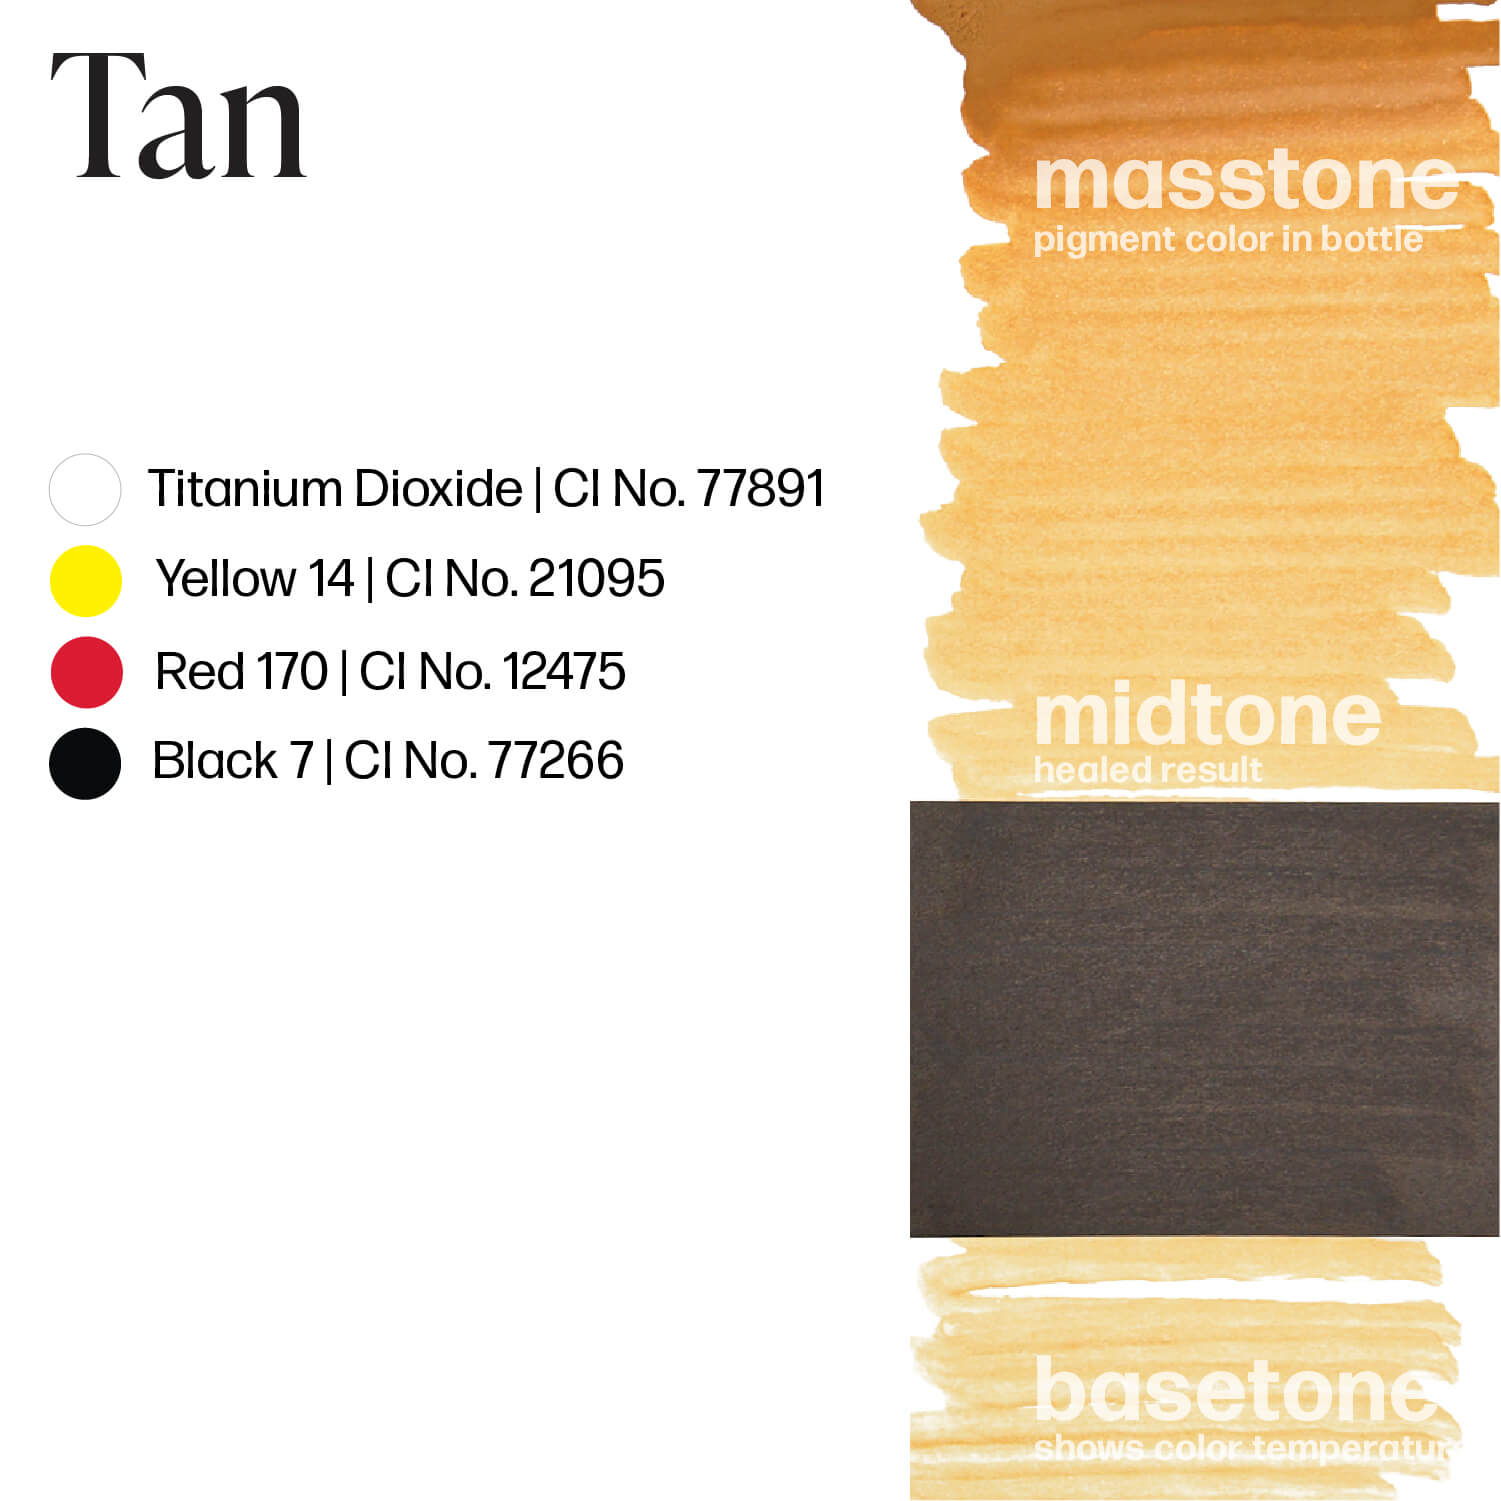 Perma Blend Tan Brow Ink Drawdown Masstone Midtone Basetone